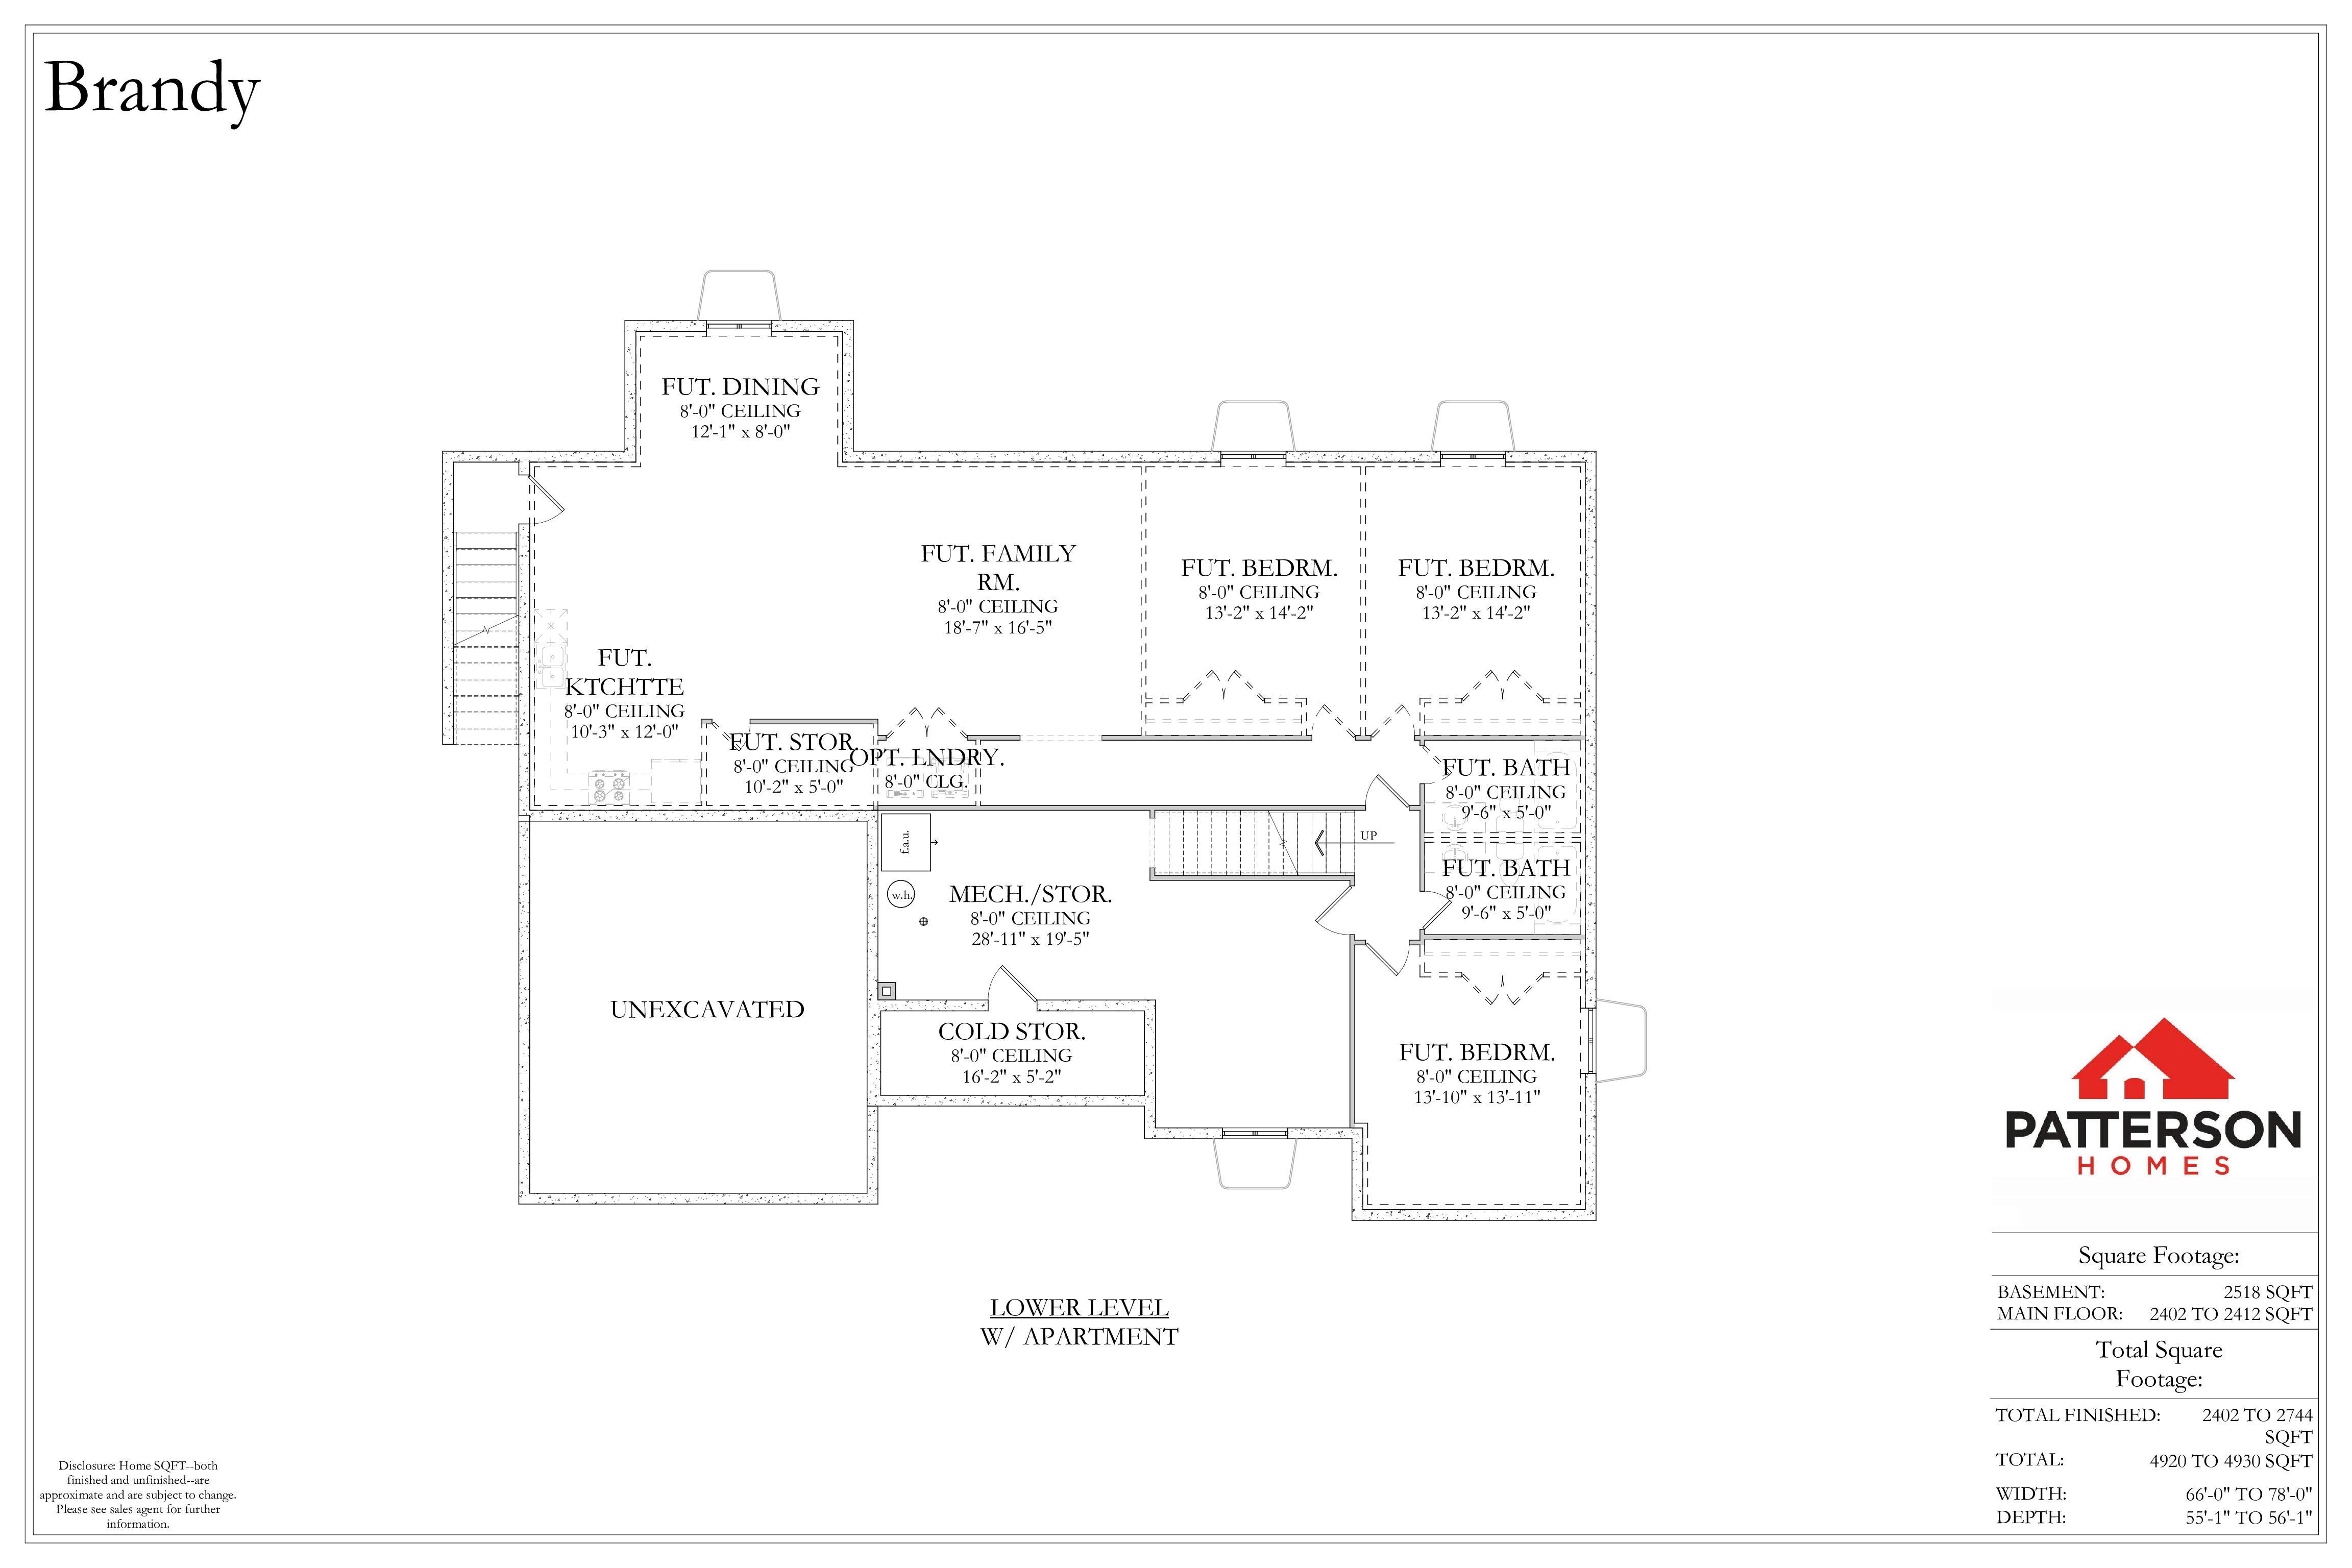 brandy-website-floor-plans-basement-w-apartment